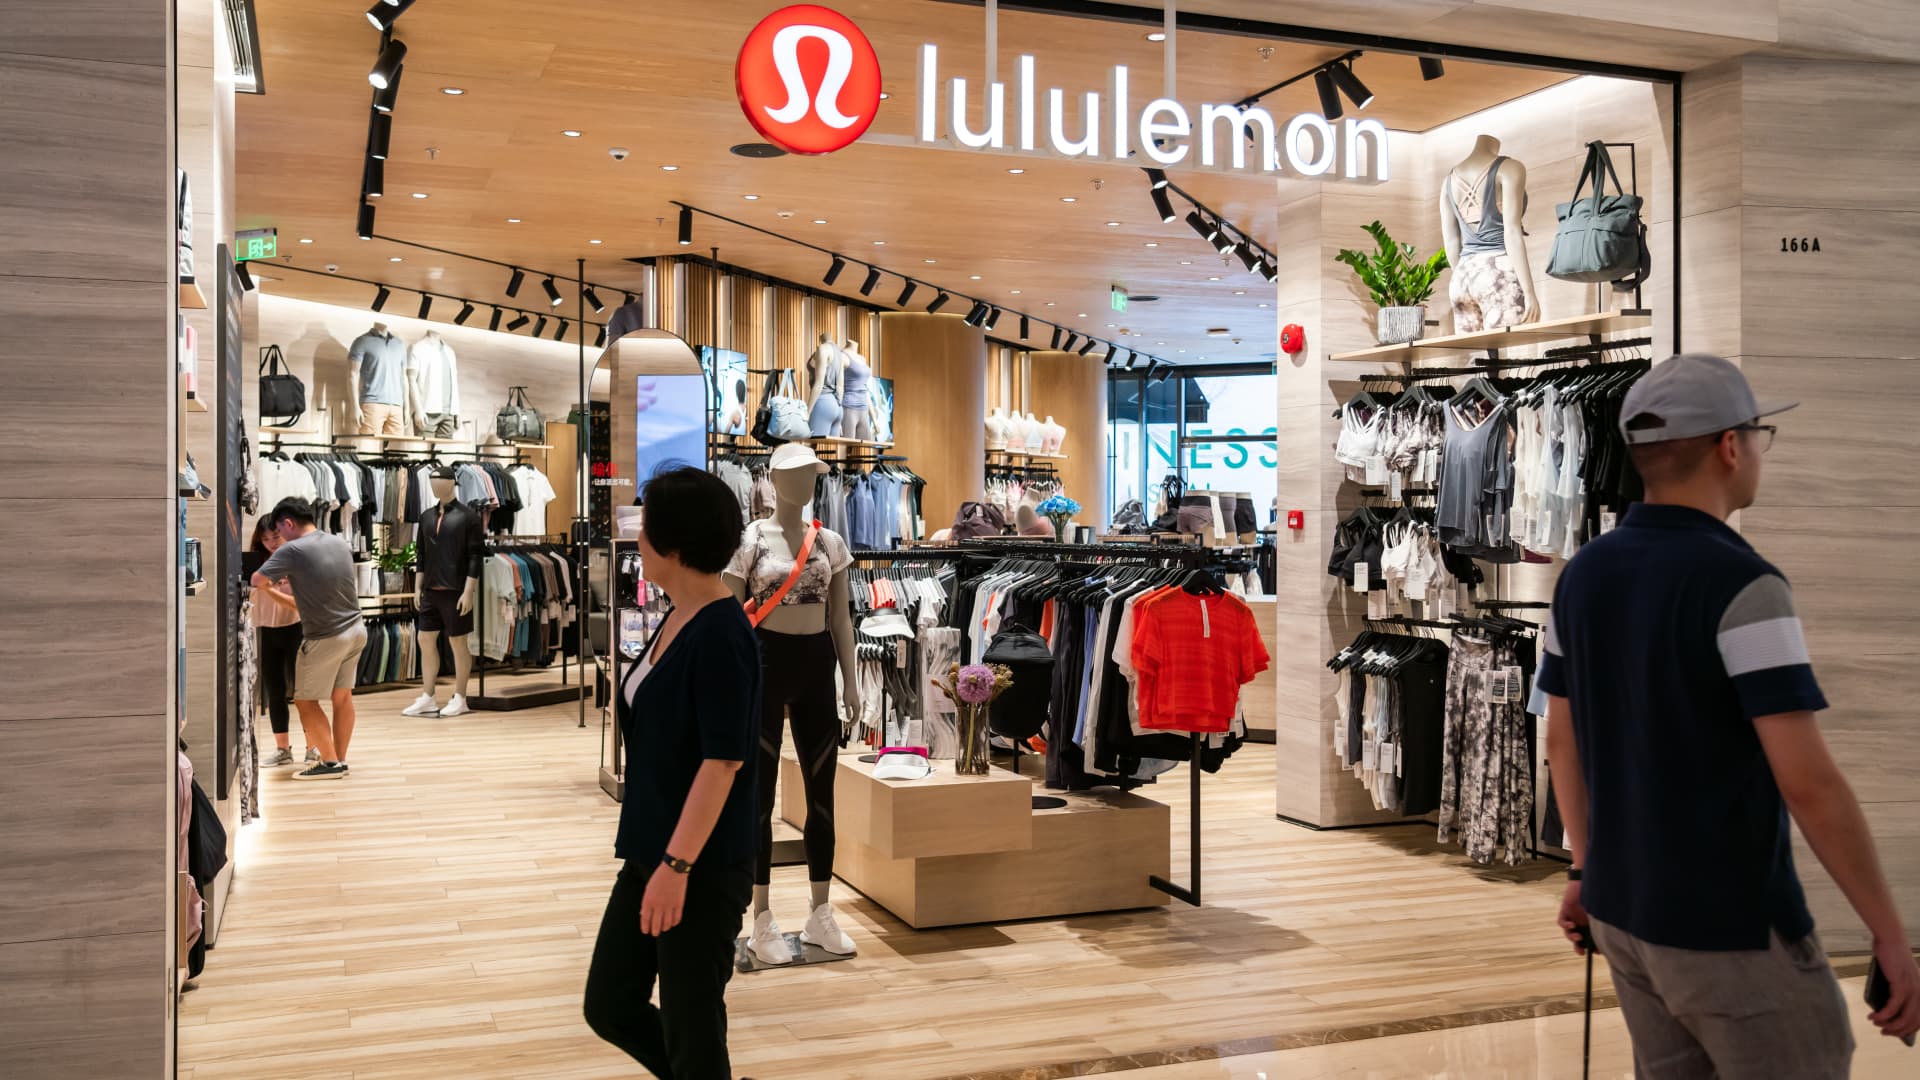 Pedestrians seen walking past Canadian athletic apparel retailer Lululemon in Shanghai.